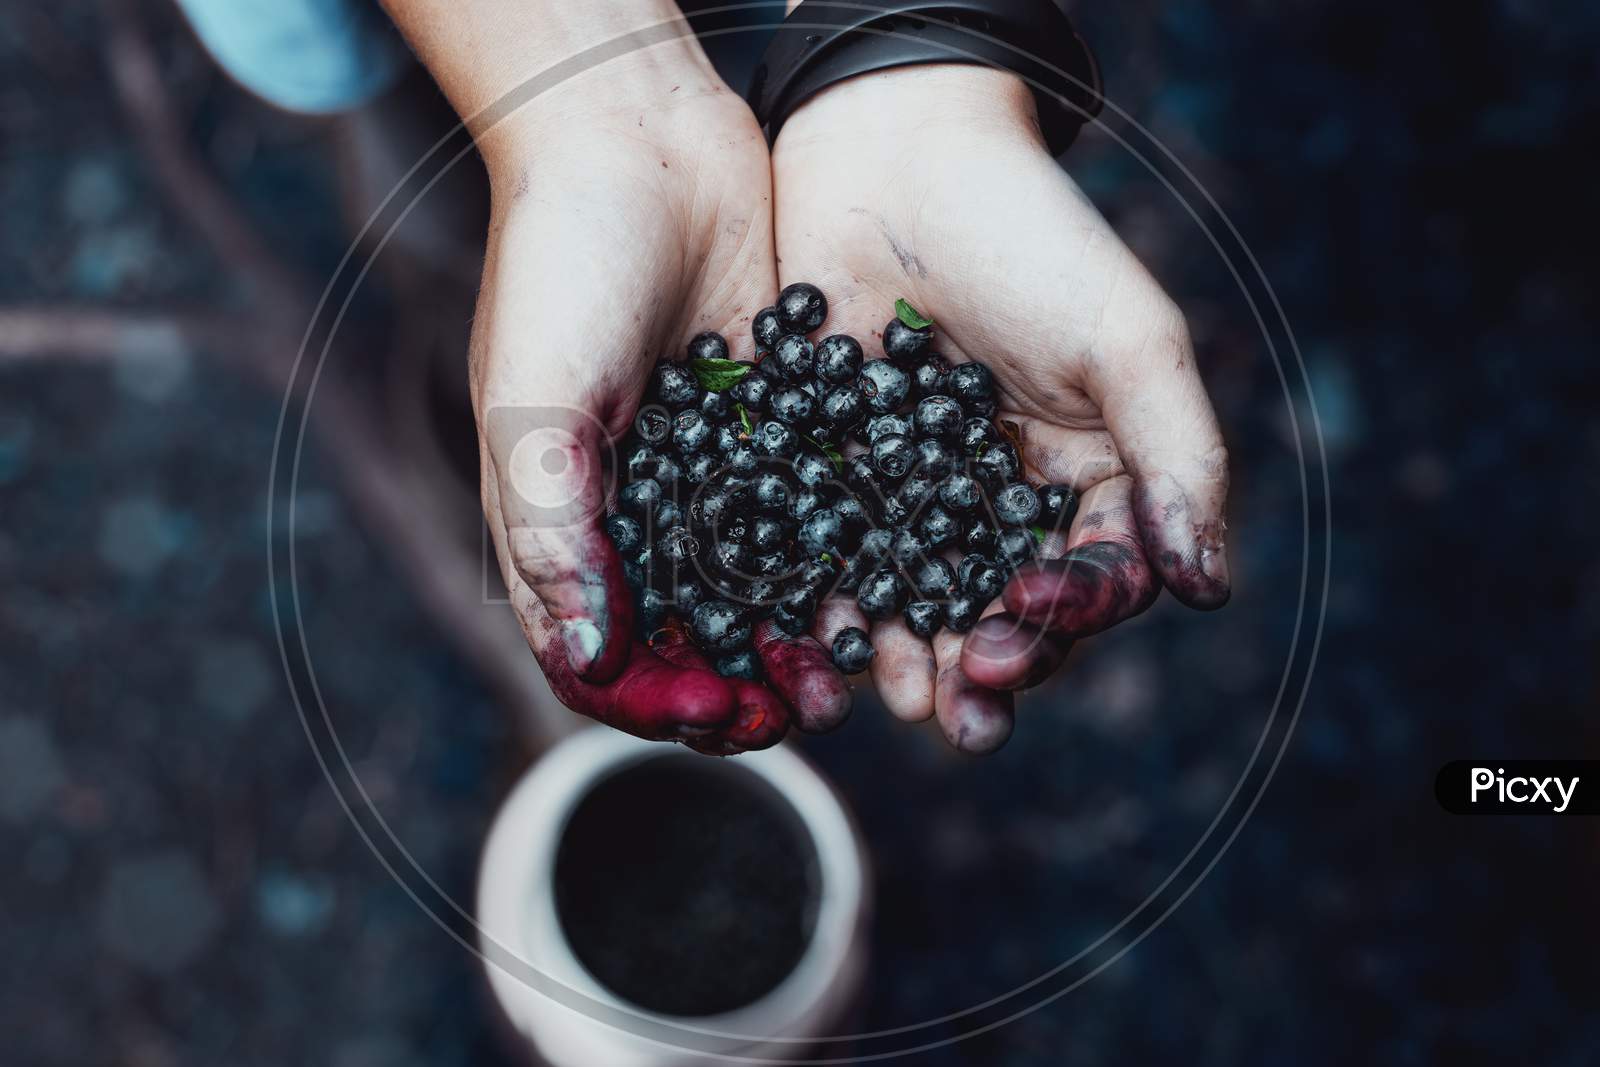 Hands full of berries.